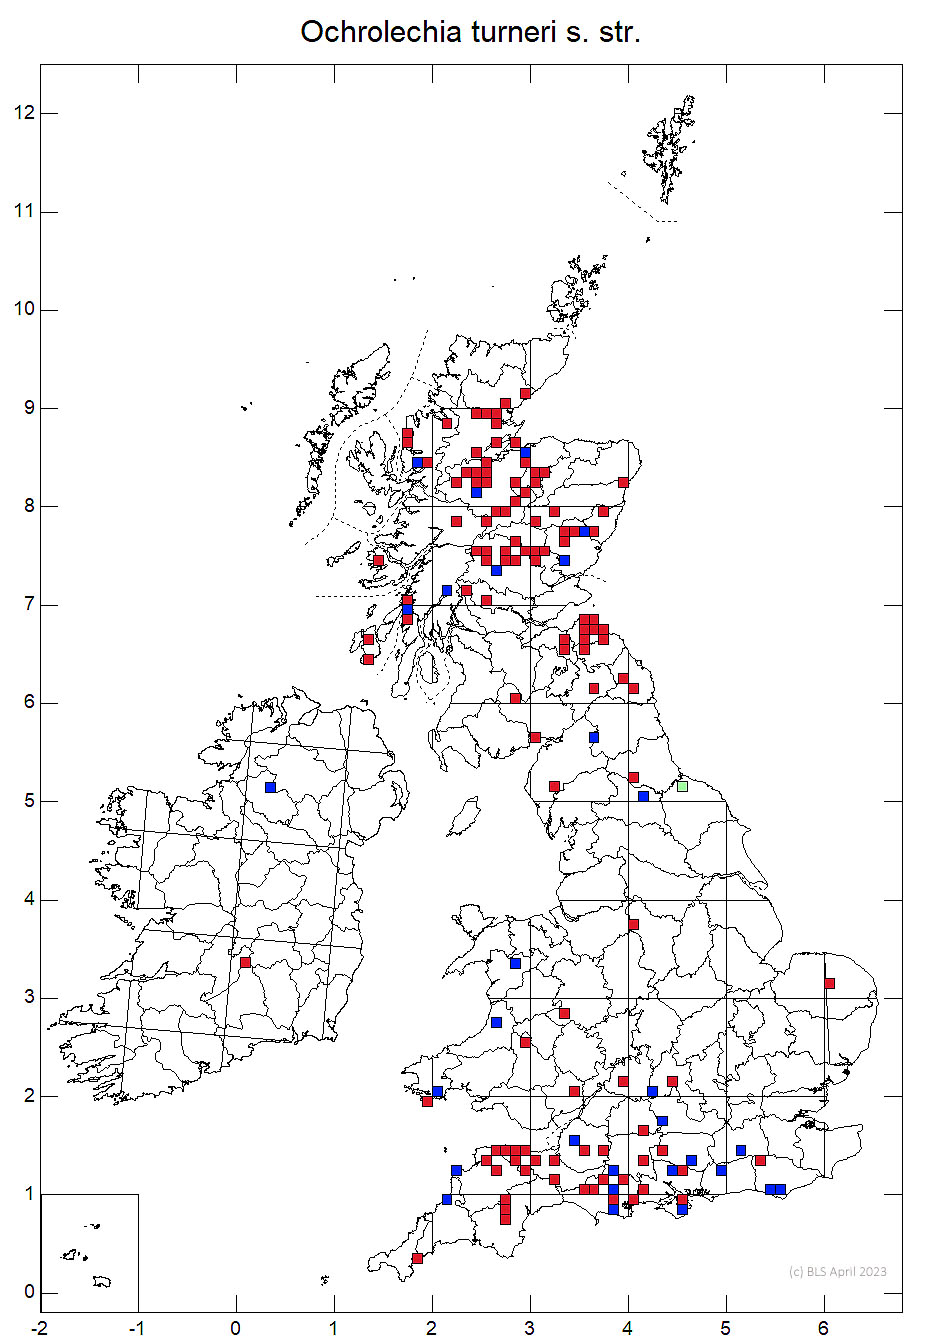 Ochrolechia turneri s. str. 10km sq distribution map